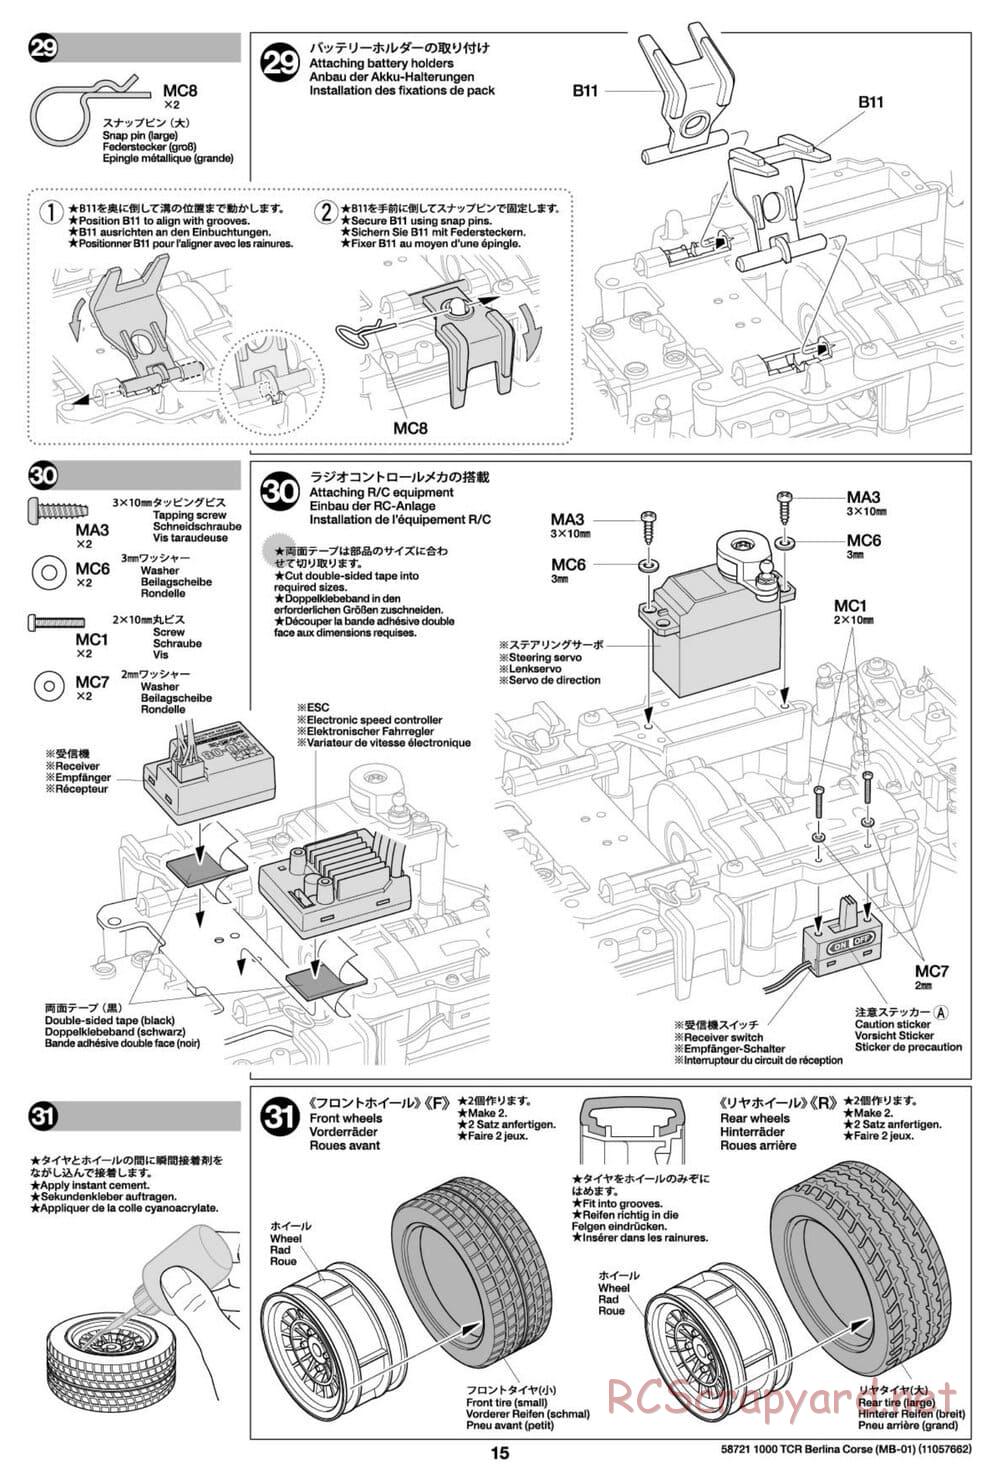 Tamiya - Fiat Abarth 1000 TCR Berlina Corsa - MB-01 Chassis - Manual - Page 15